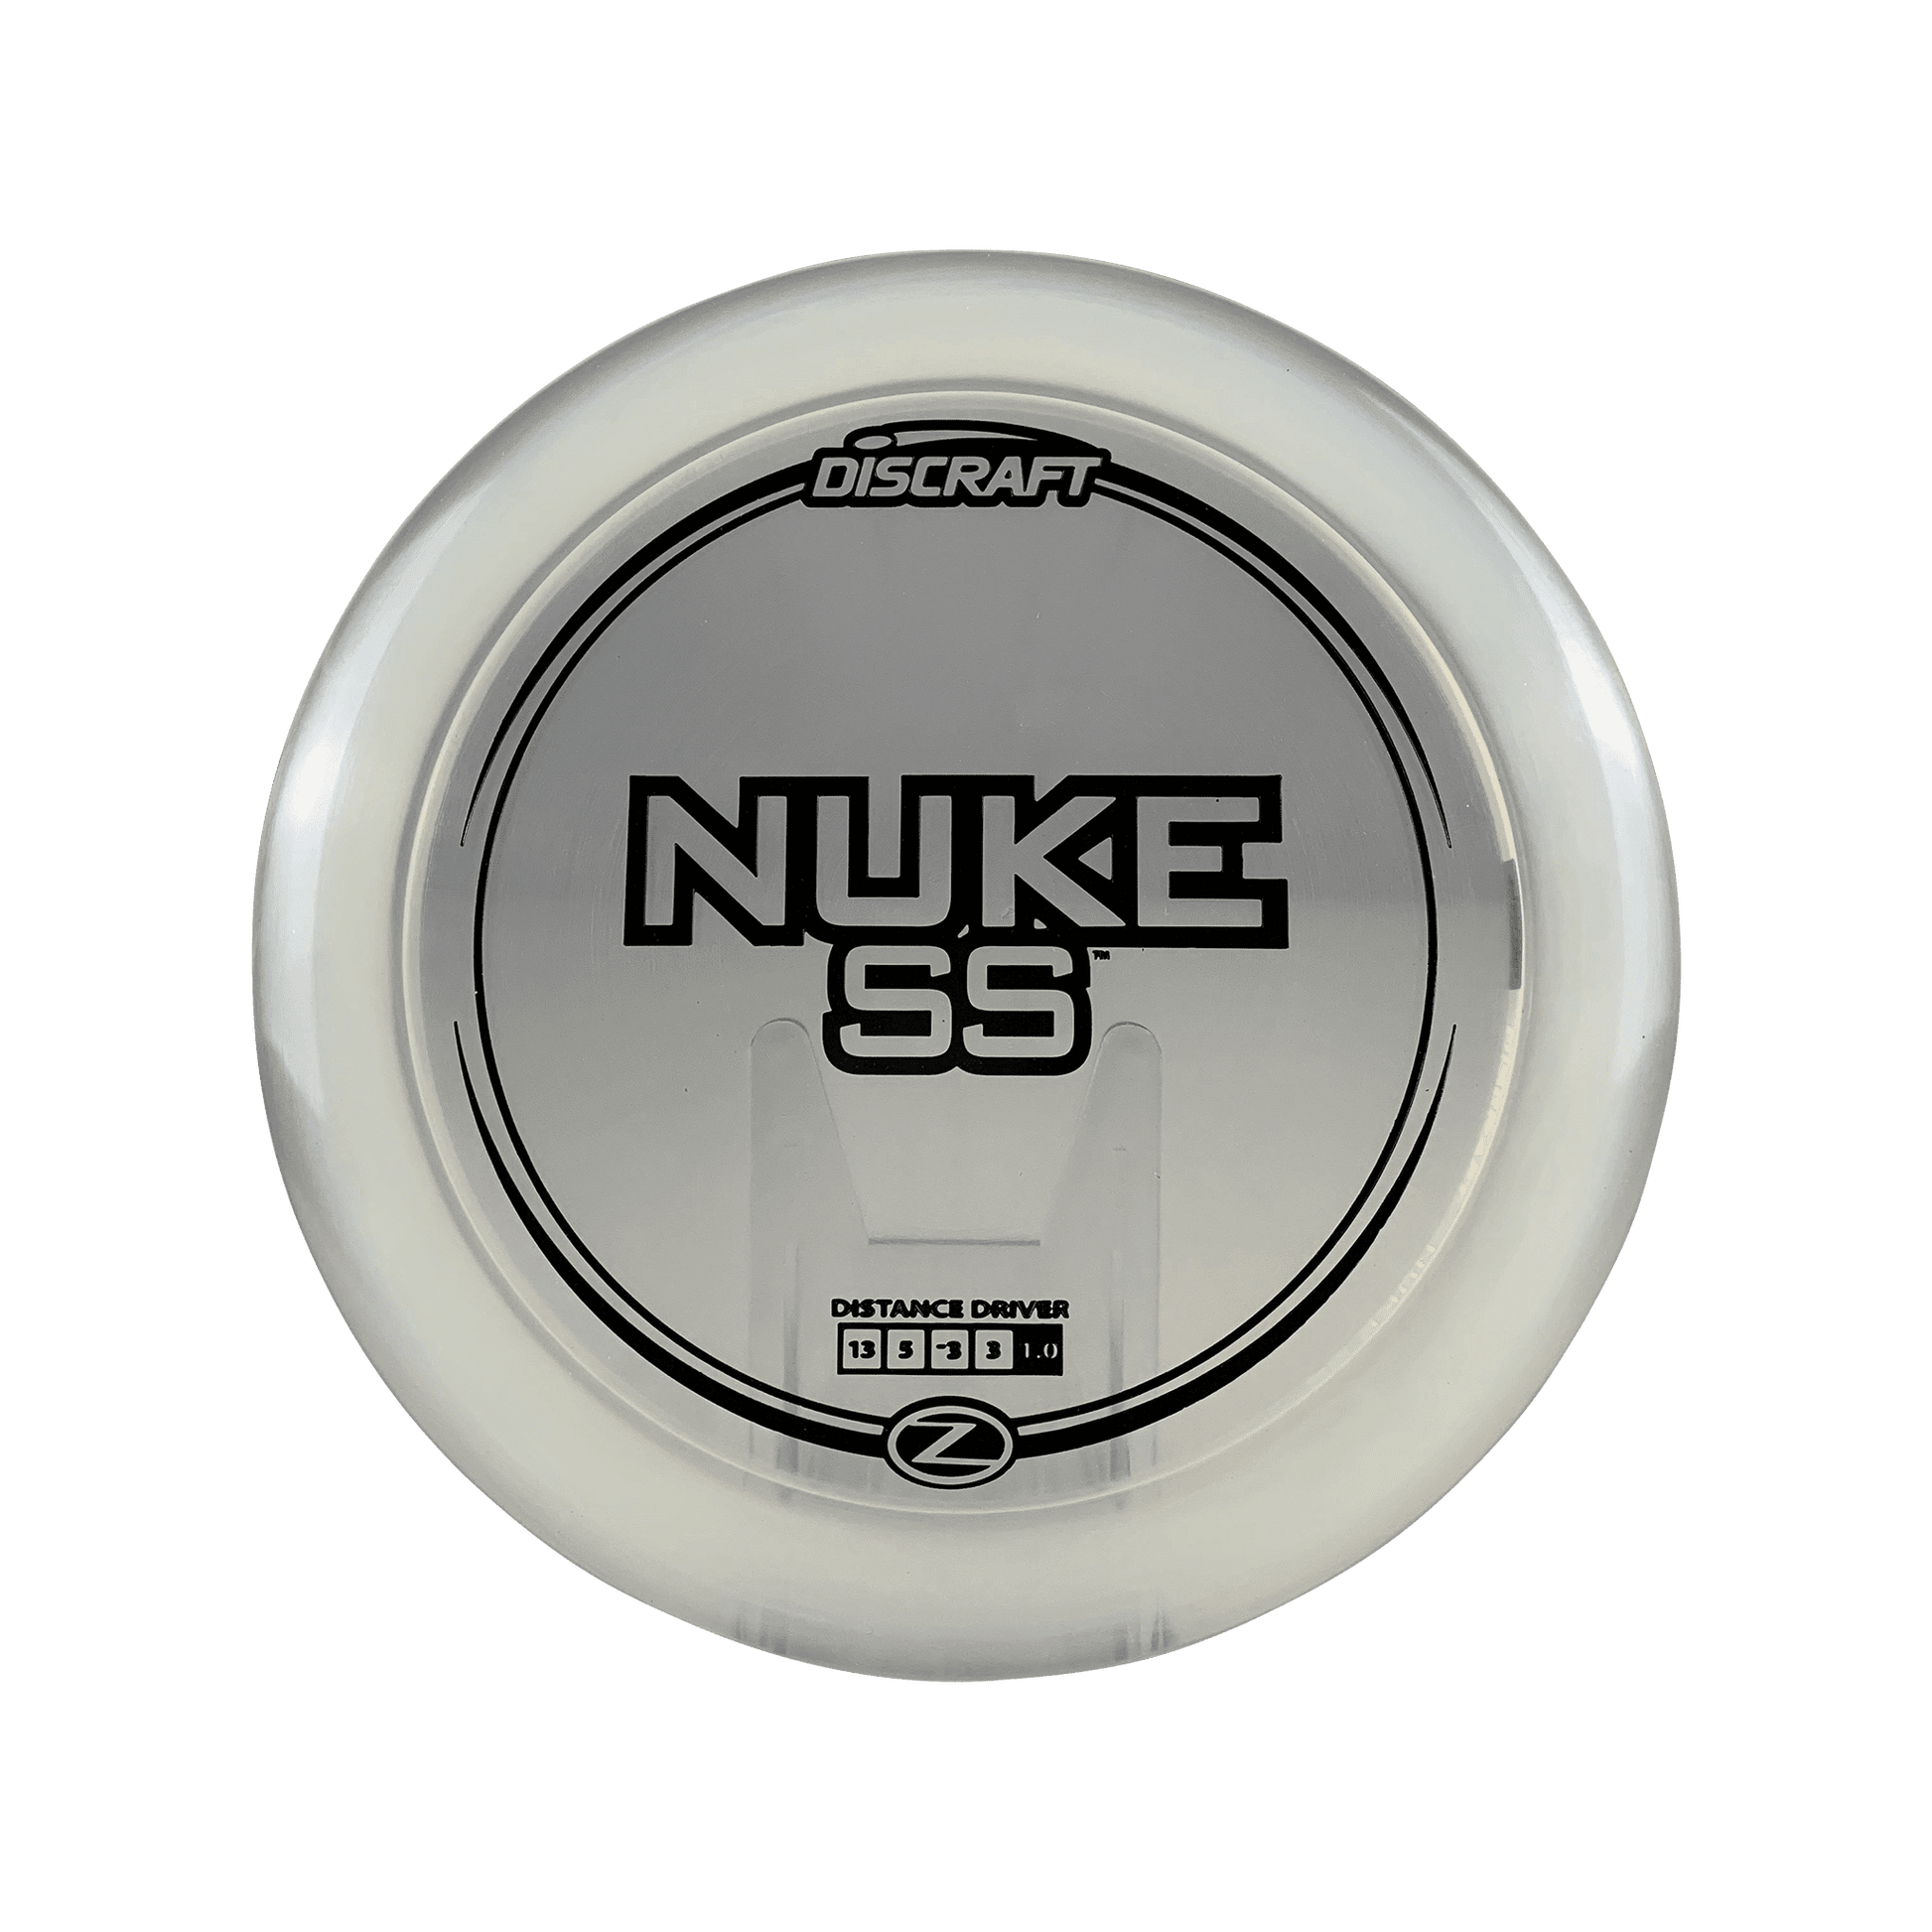 Z Nuke SS Disc Discraft clear white 173 